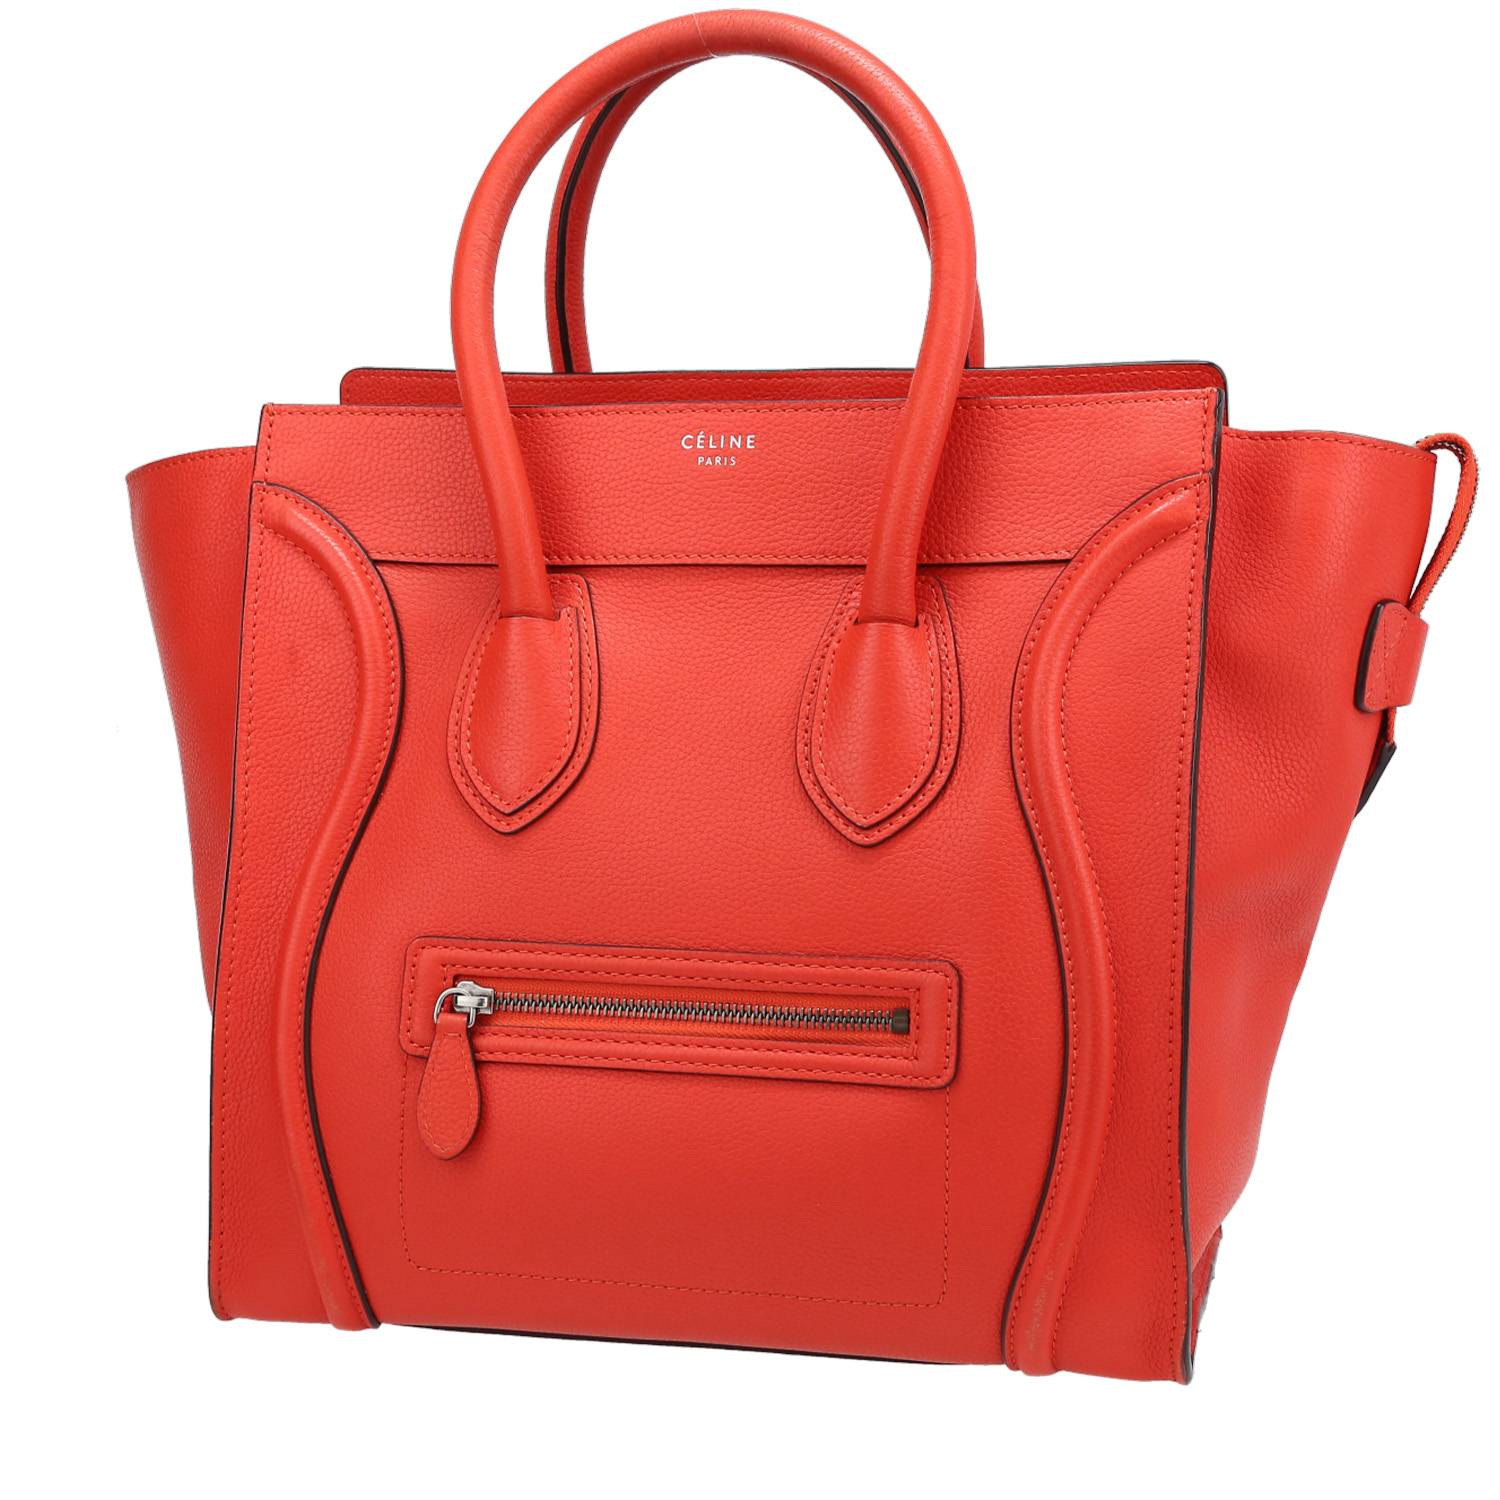 Luggage Medium Model Handbag In Red Leather